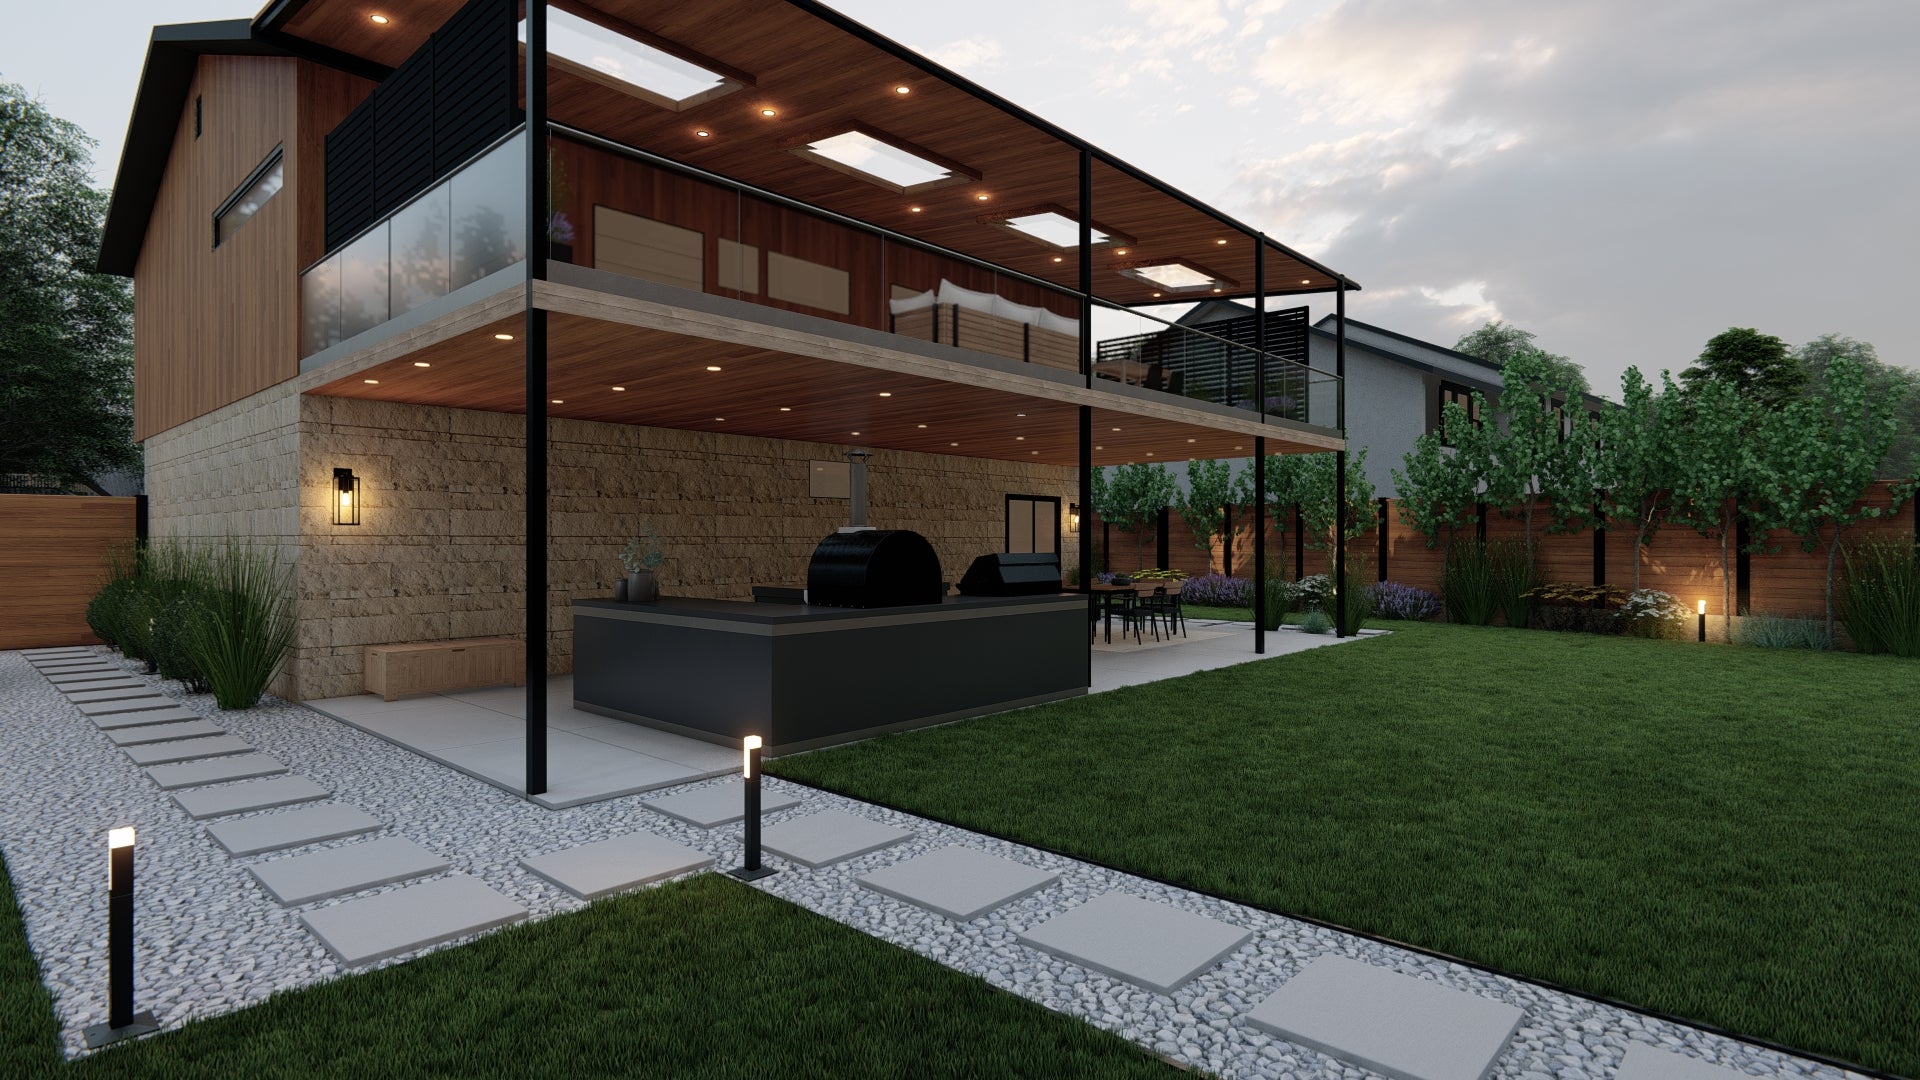 A Yardzen backyard design featuring lighting from Lamps Plus